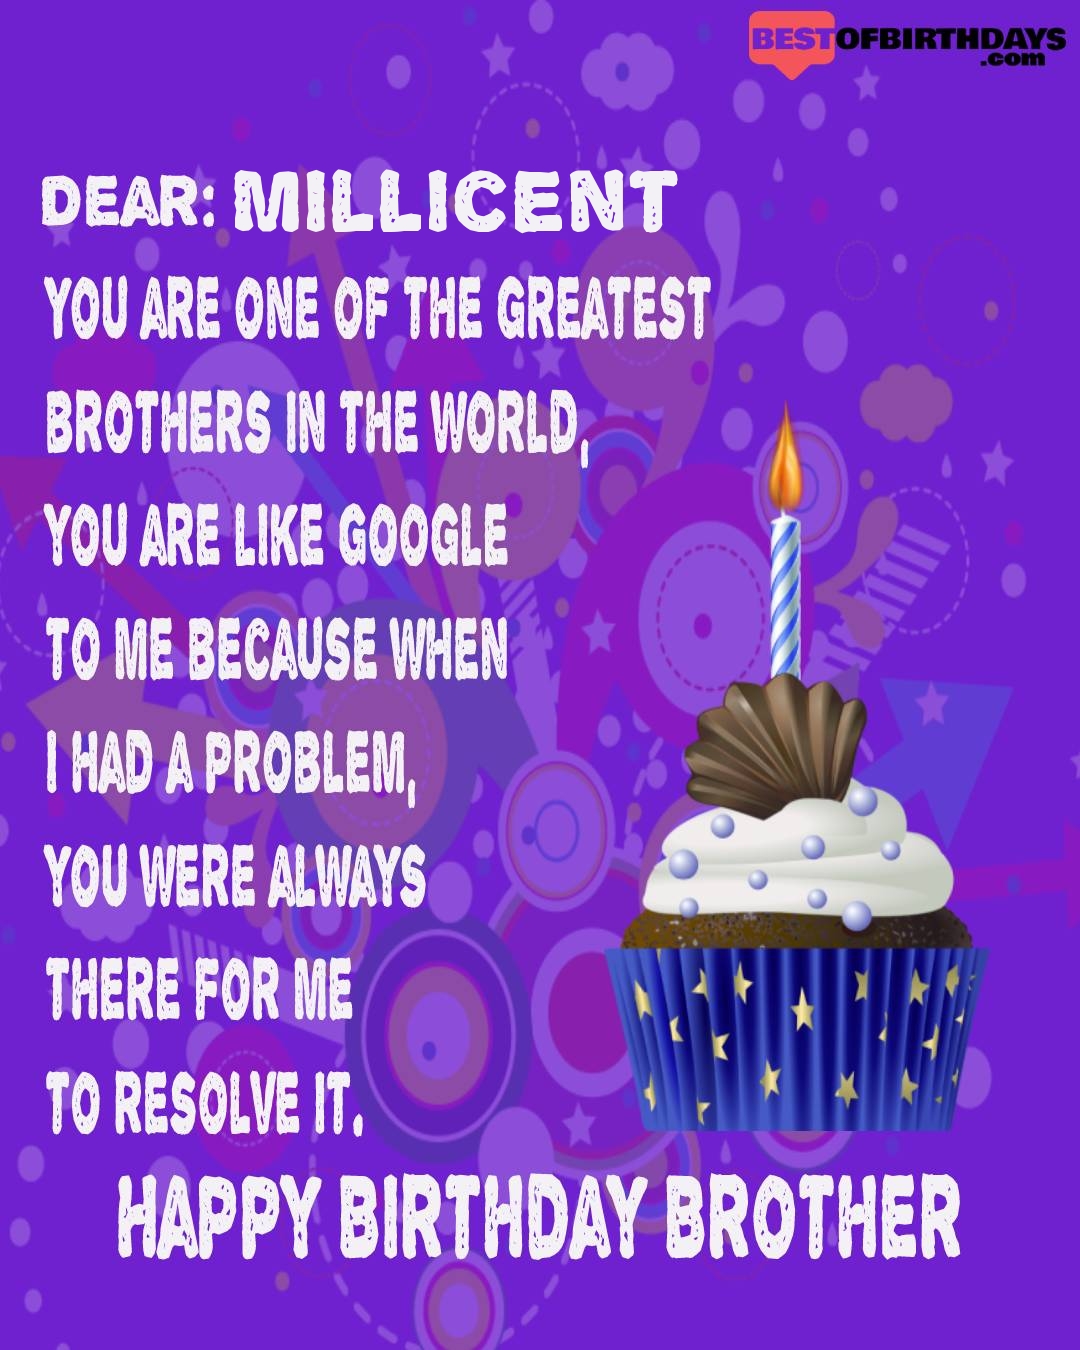 Happy birthday millicent bhai brother bro